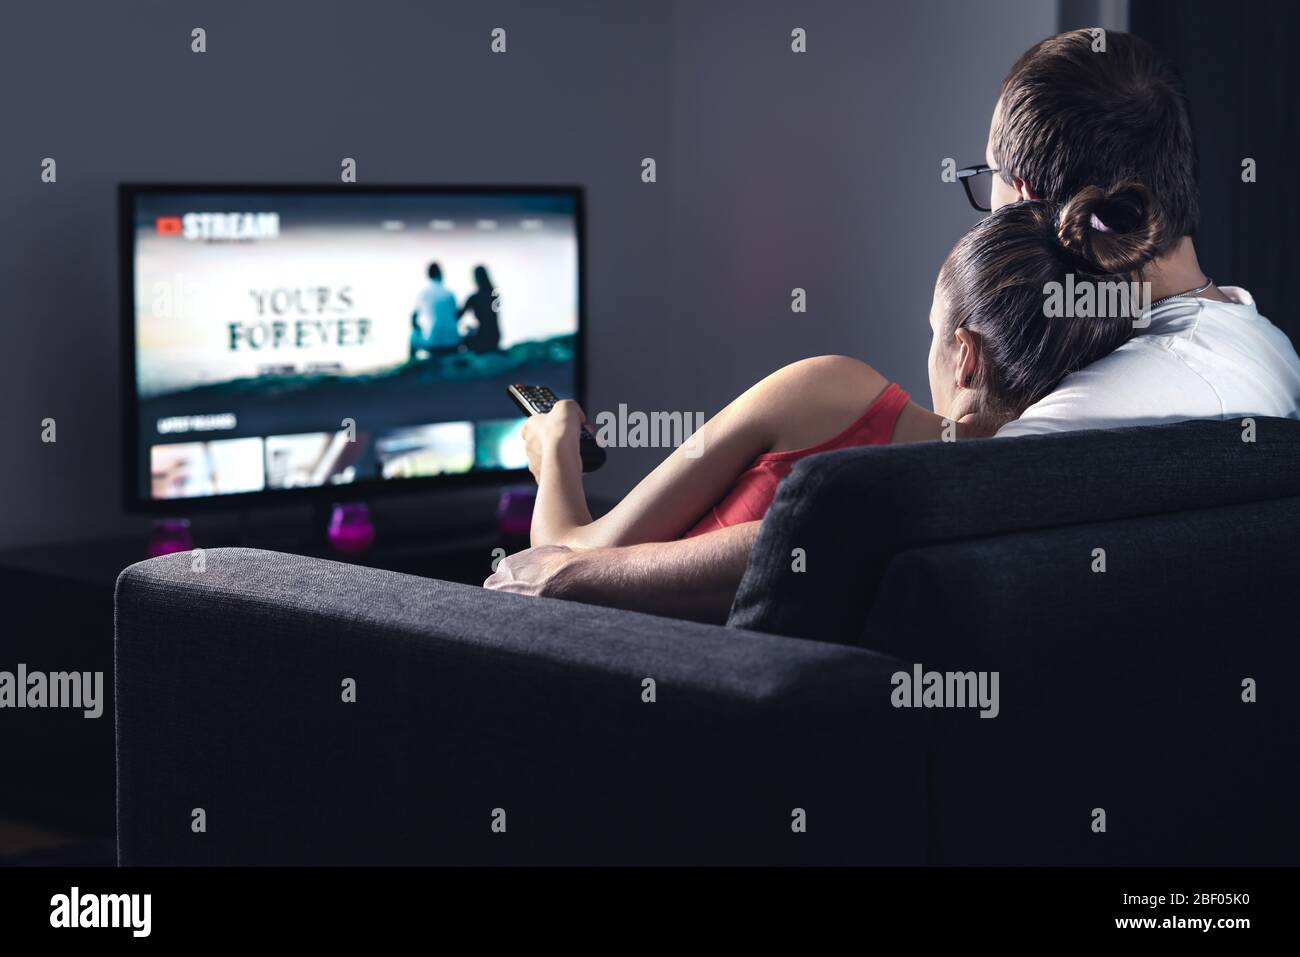 Movie stream service on smart tv. Couple watching series online